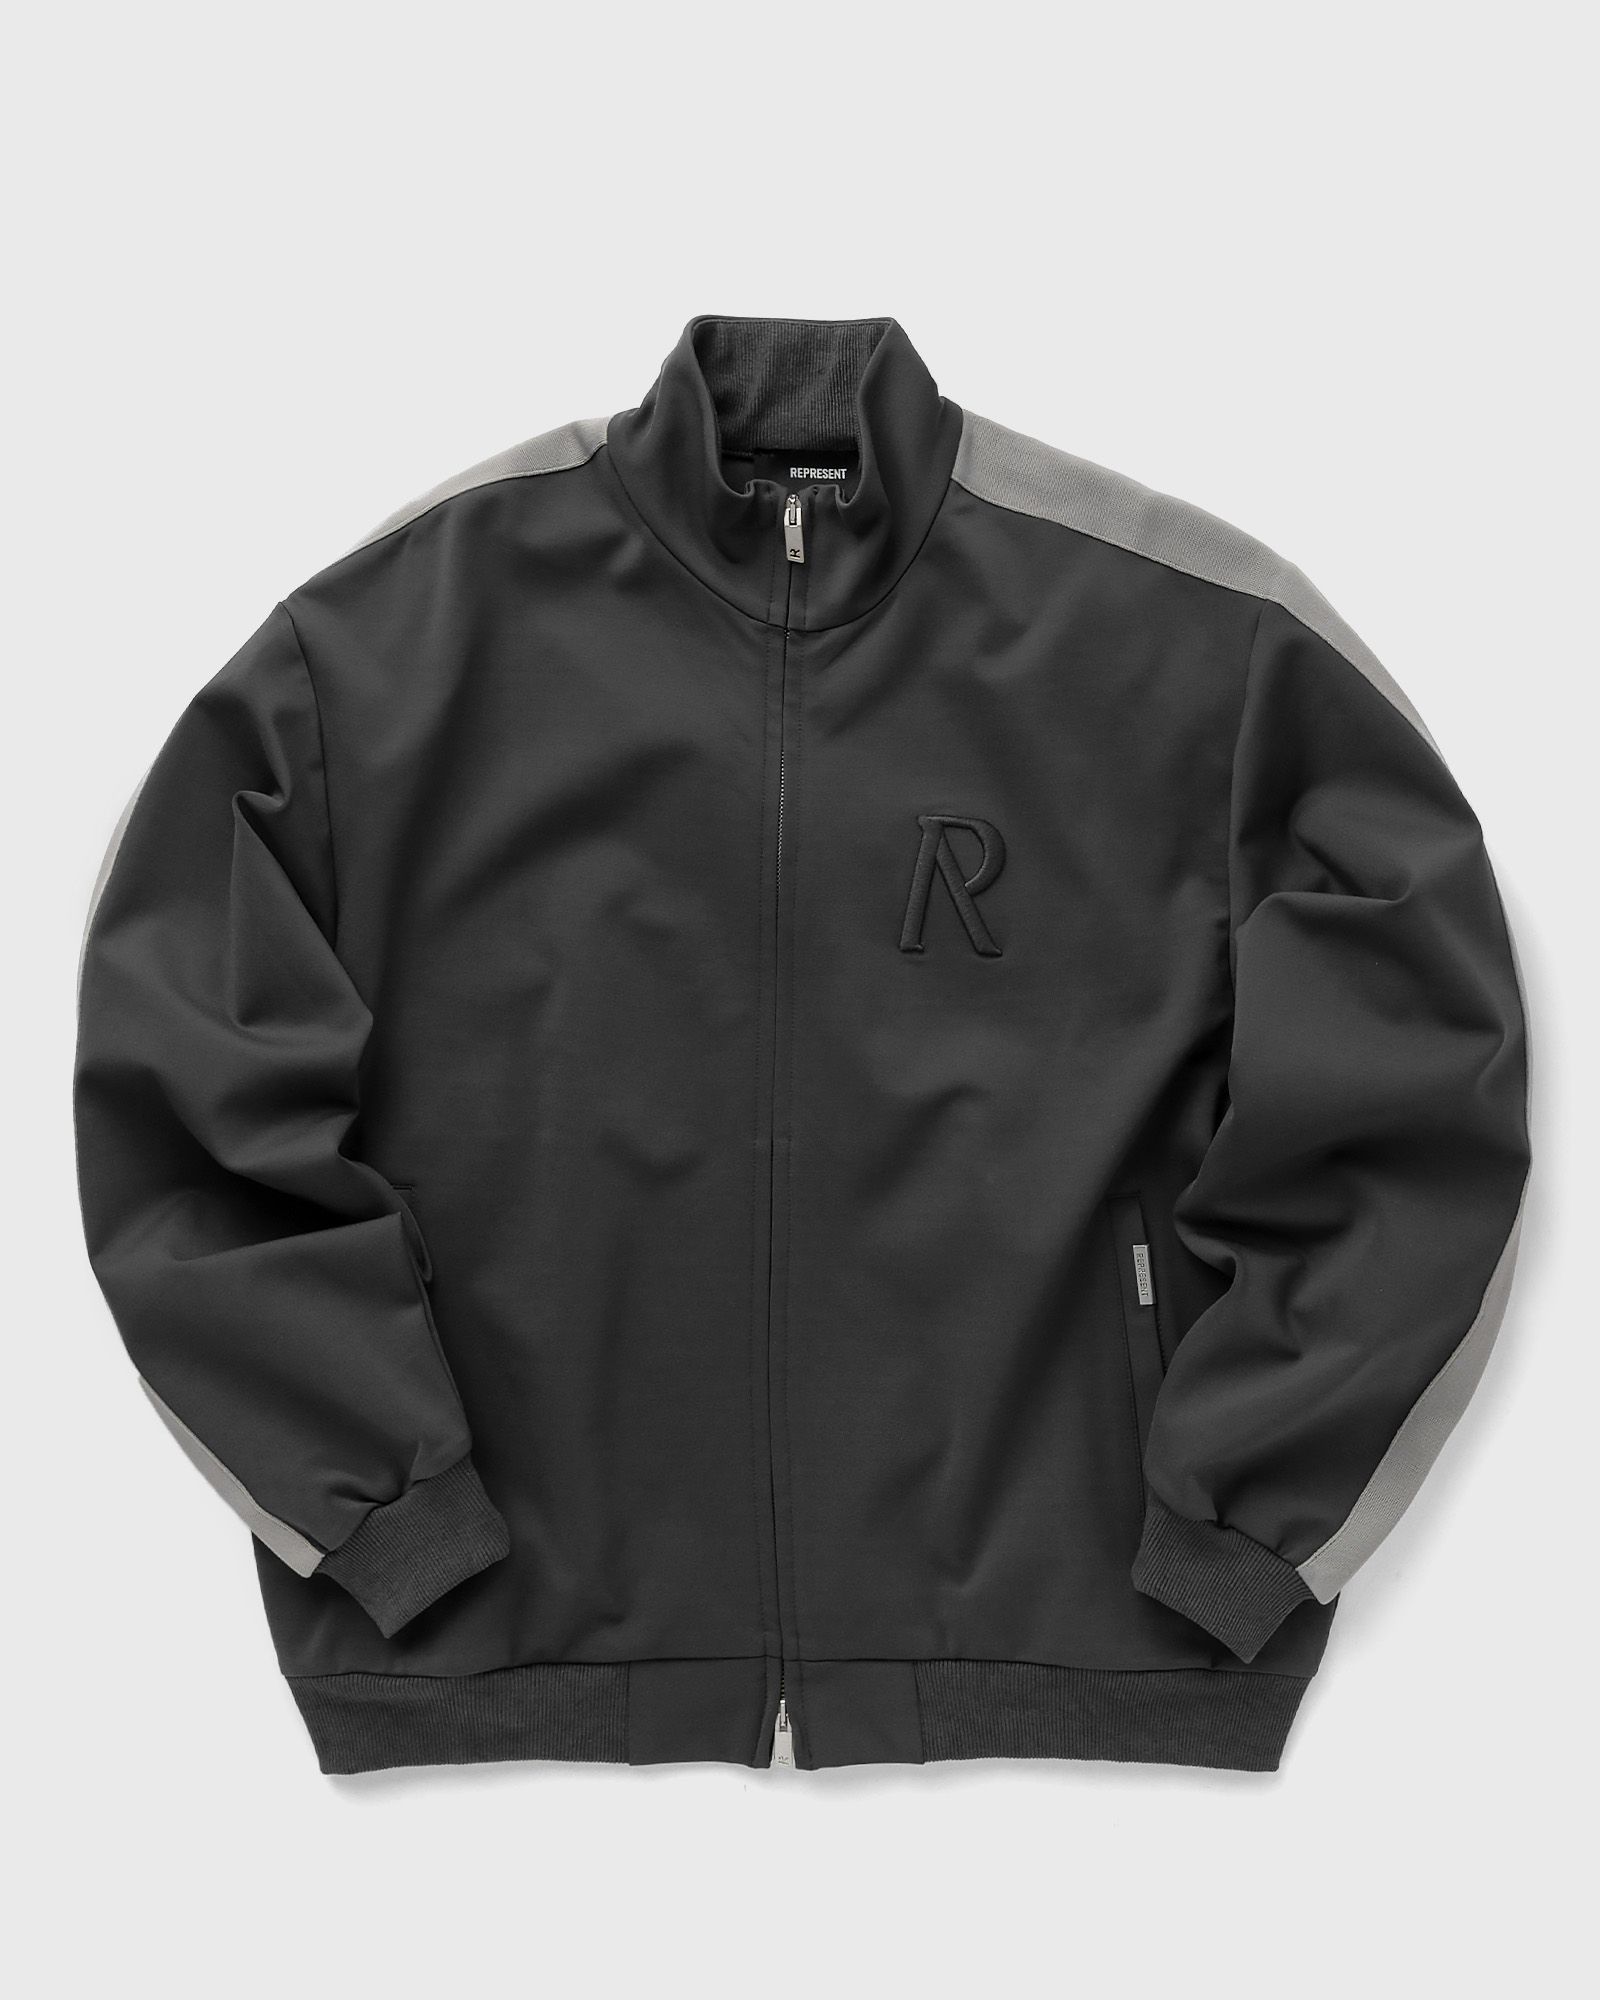 Represent - initial tracksuit jacket men track jackets grey in größe:m